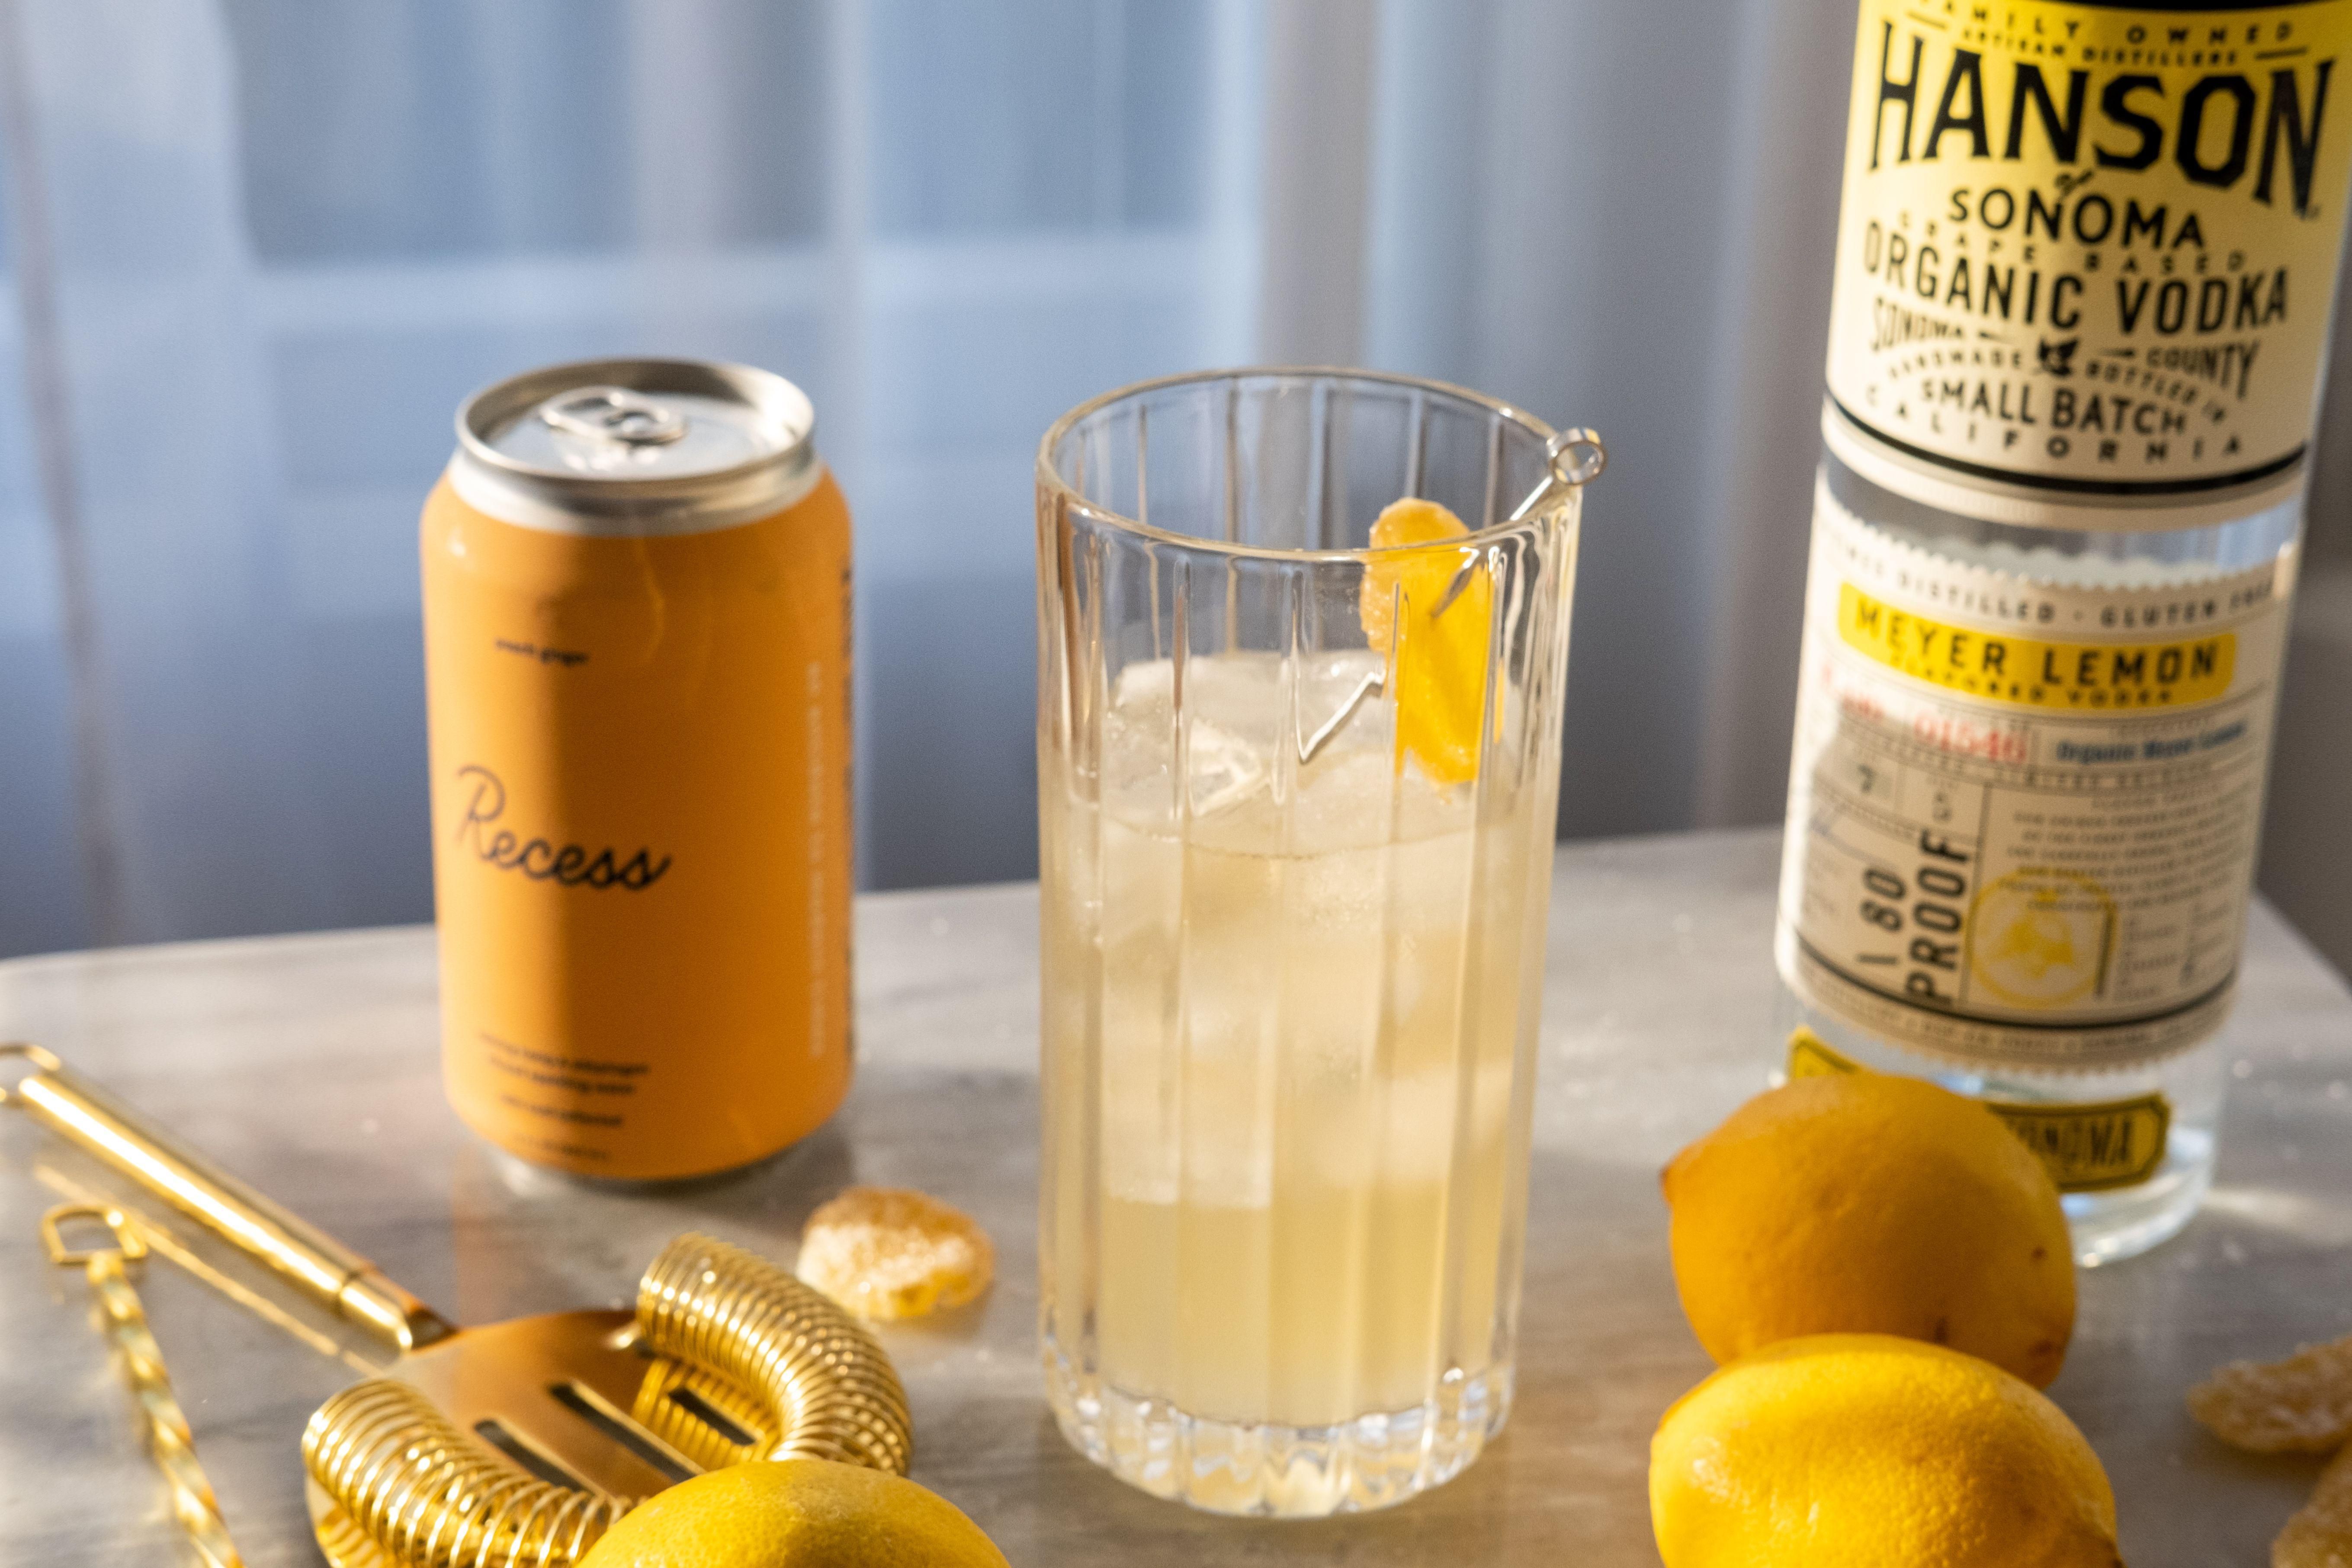 Secret Recipe: Meyer lemon vodka + CBD sparkling water makes for a Calmer Palmer